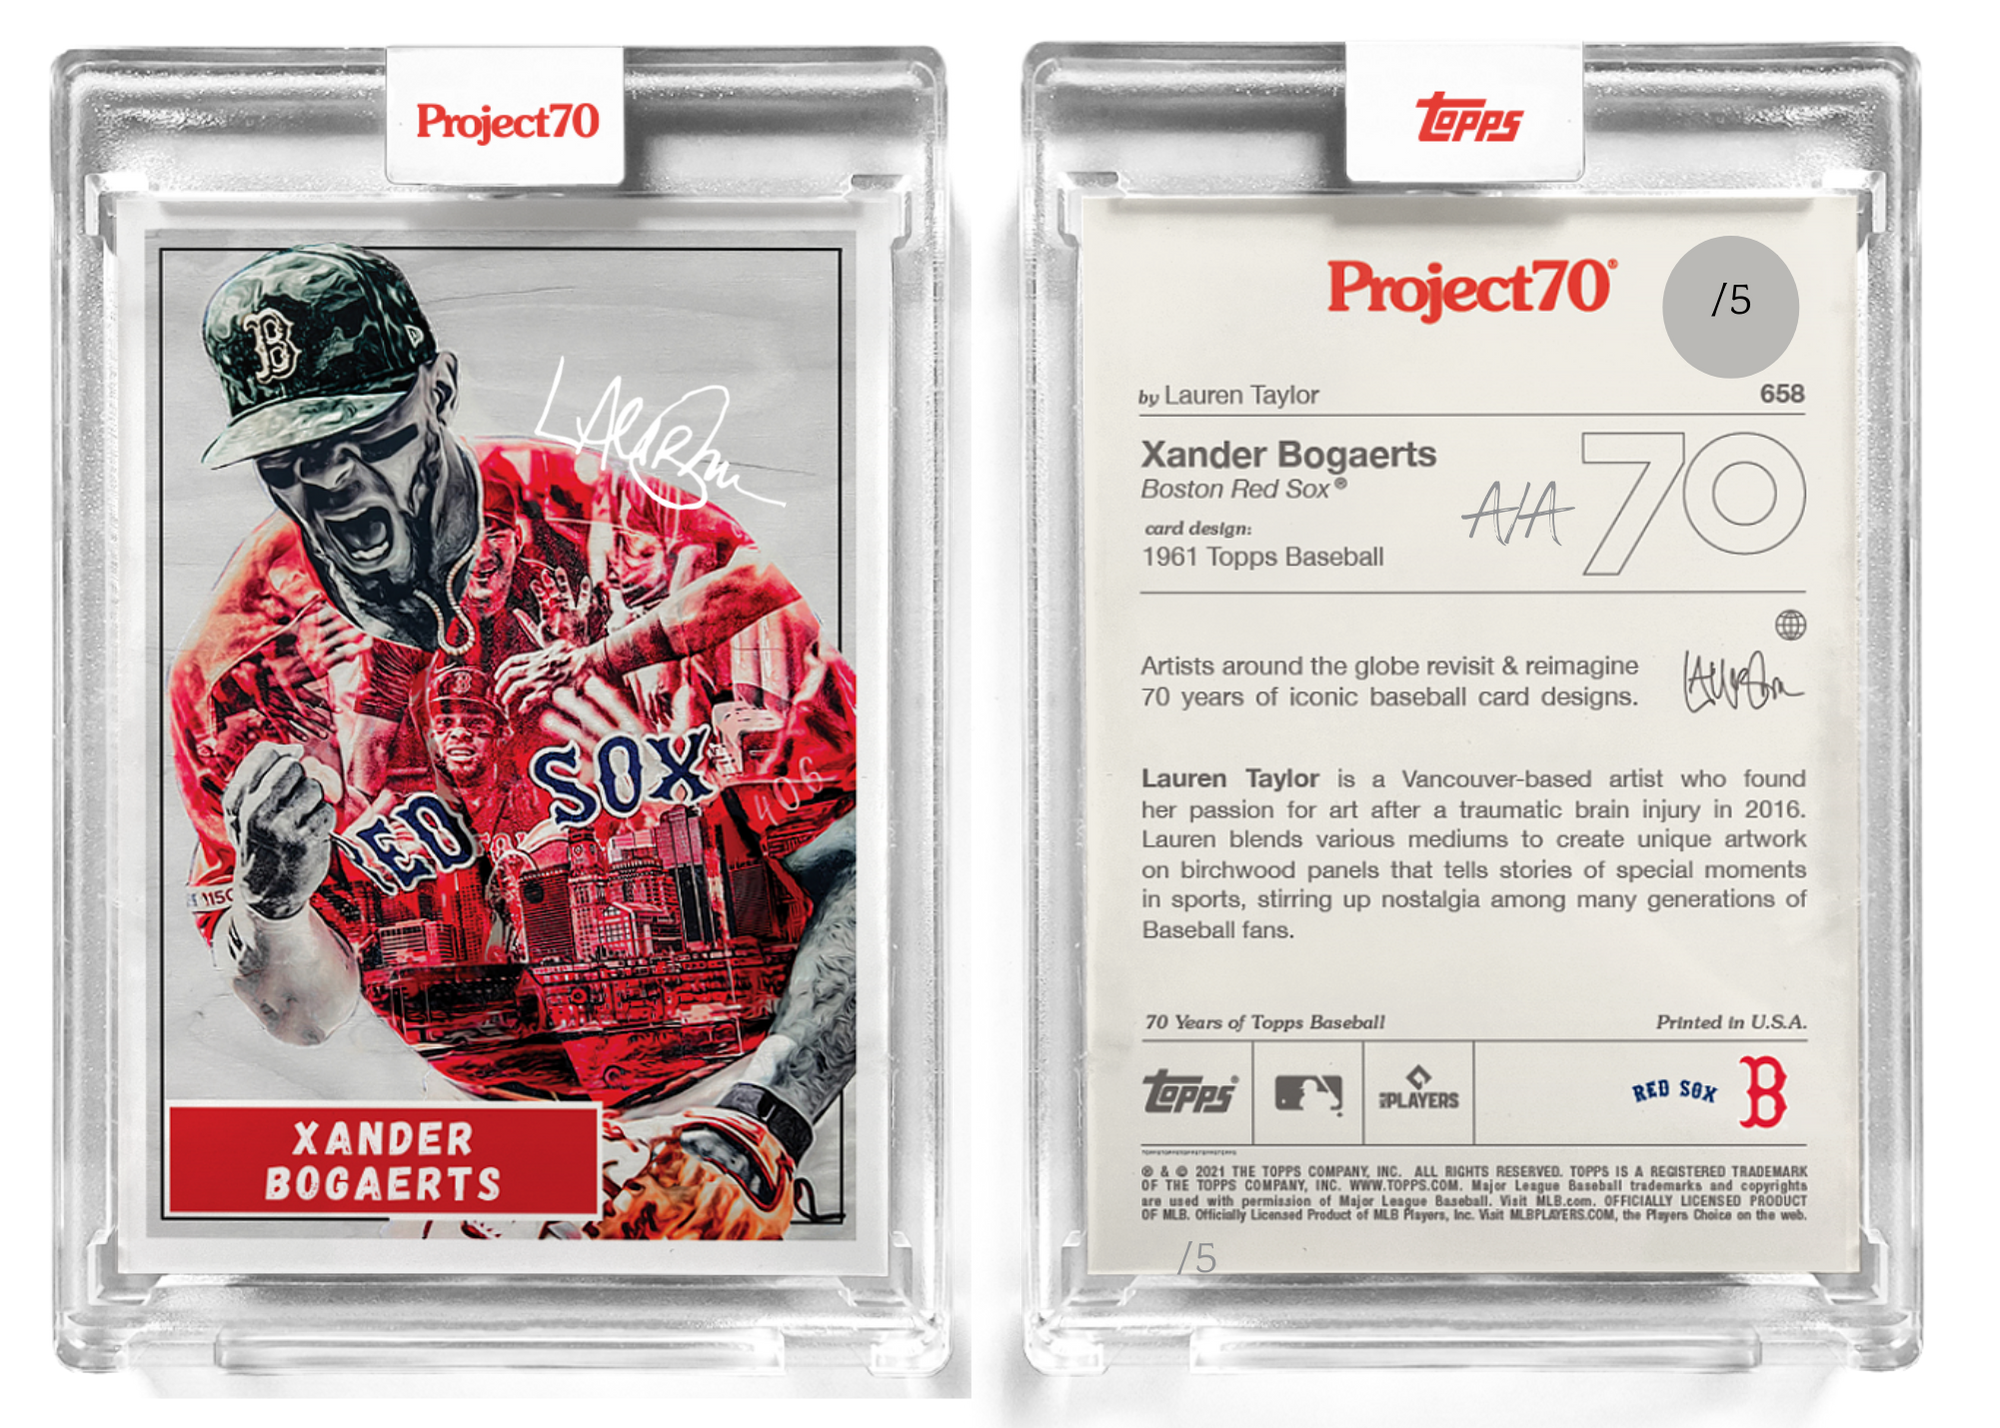 /5 Silver Metallic Artist Signature - Topps Project 70 130pt card #658 by Lauren Taylor - Xander Bogaerts